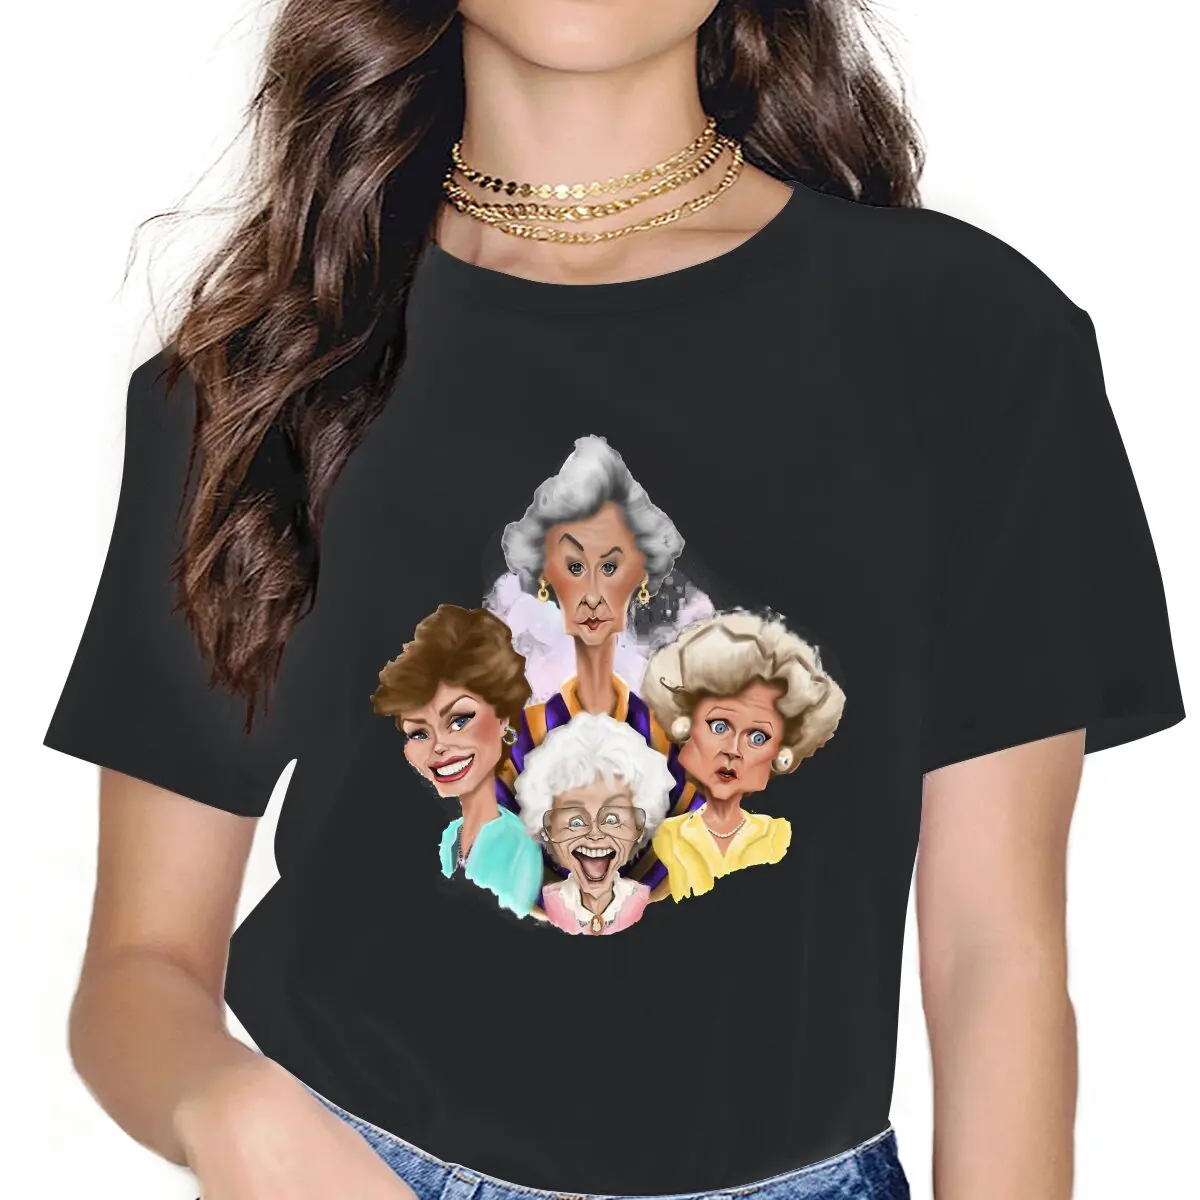 Original Caricatures Women T Shirt Golden Girls Comedy Family Friendship Bea Arthur Awesome Tees Short Sleeve Round Neck T-Shirt